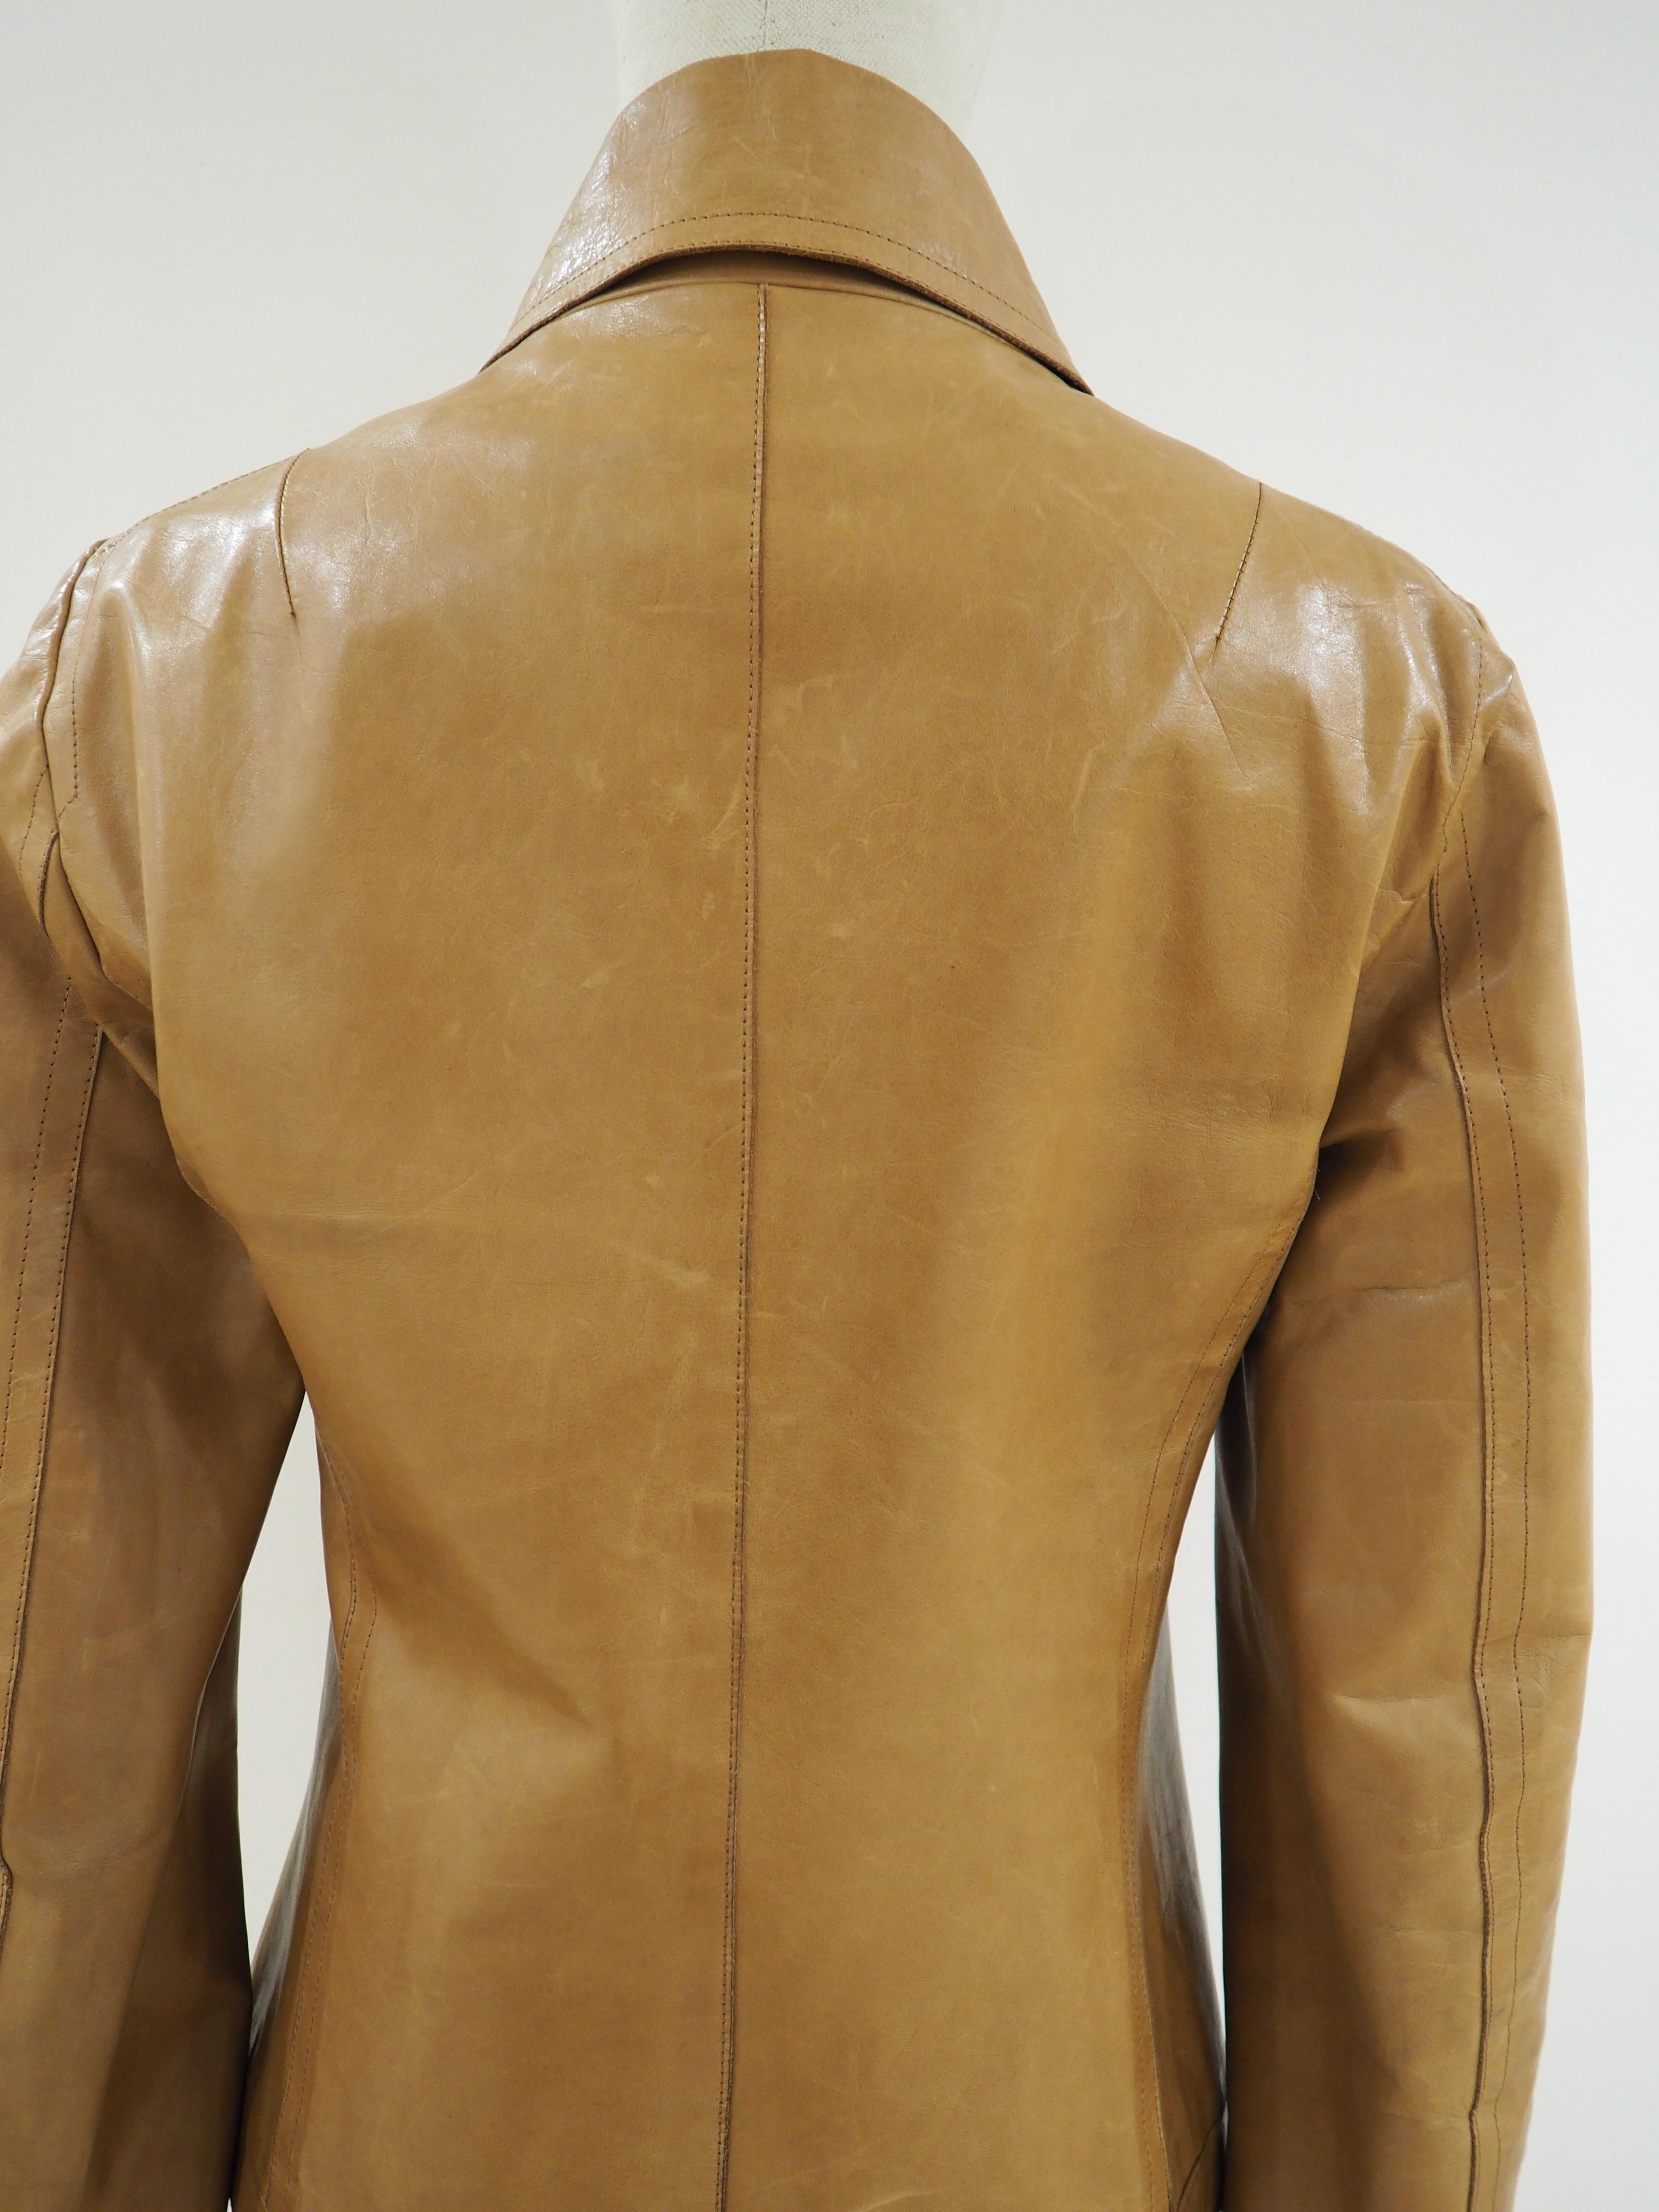 Women's Costume National leather jacket